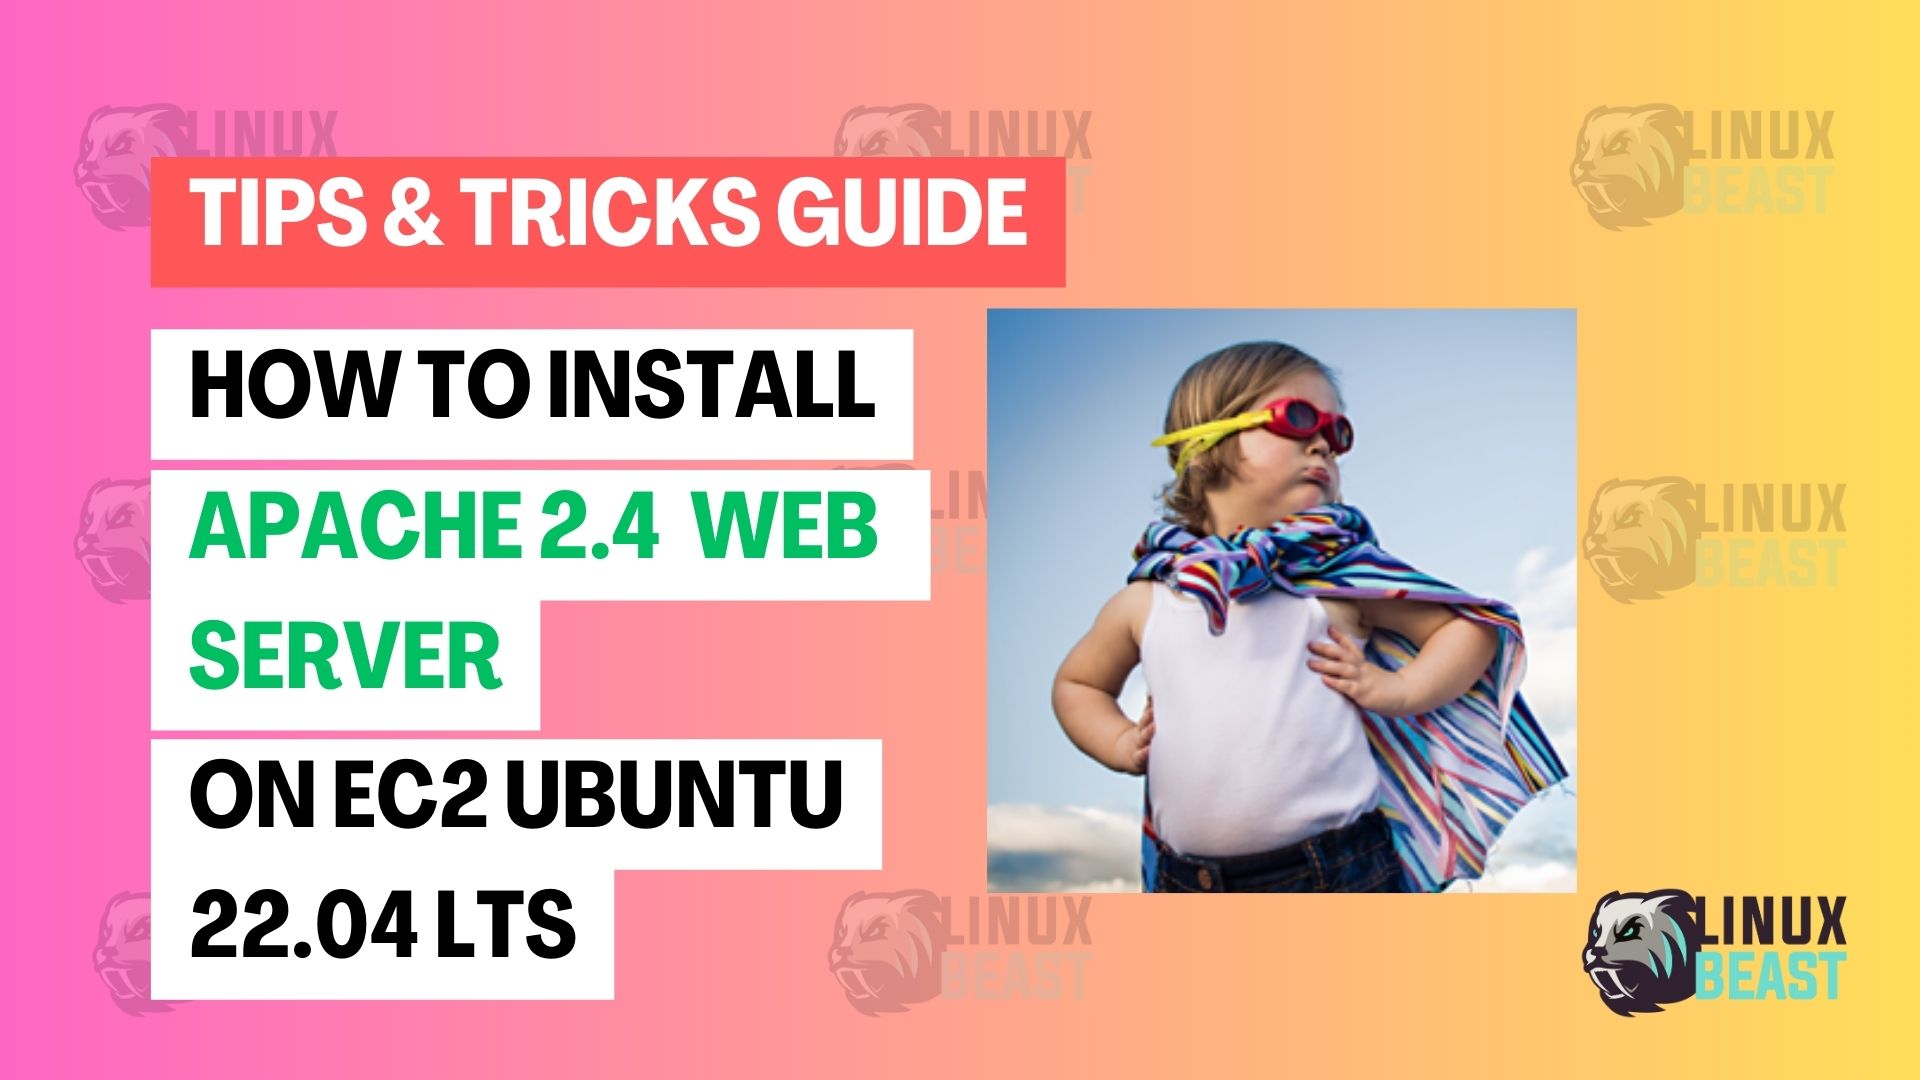 How to Install Apache 2.4 Web Server on EC2 Ubuntu 22.04 LTS